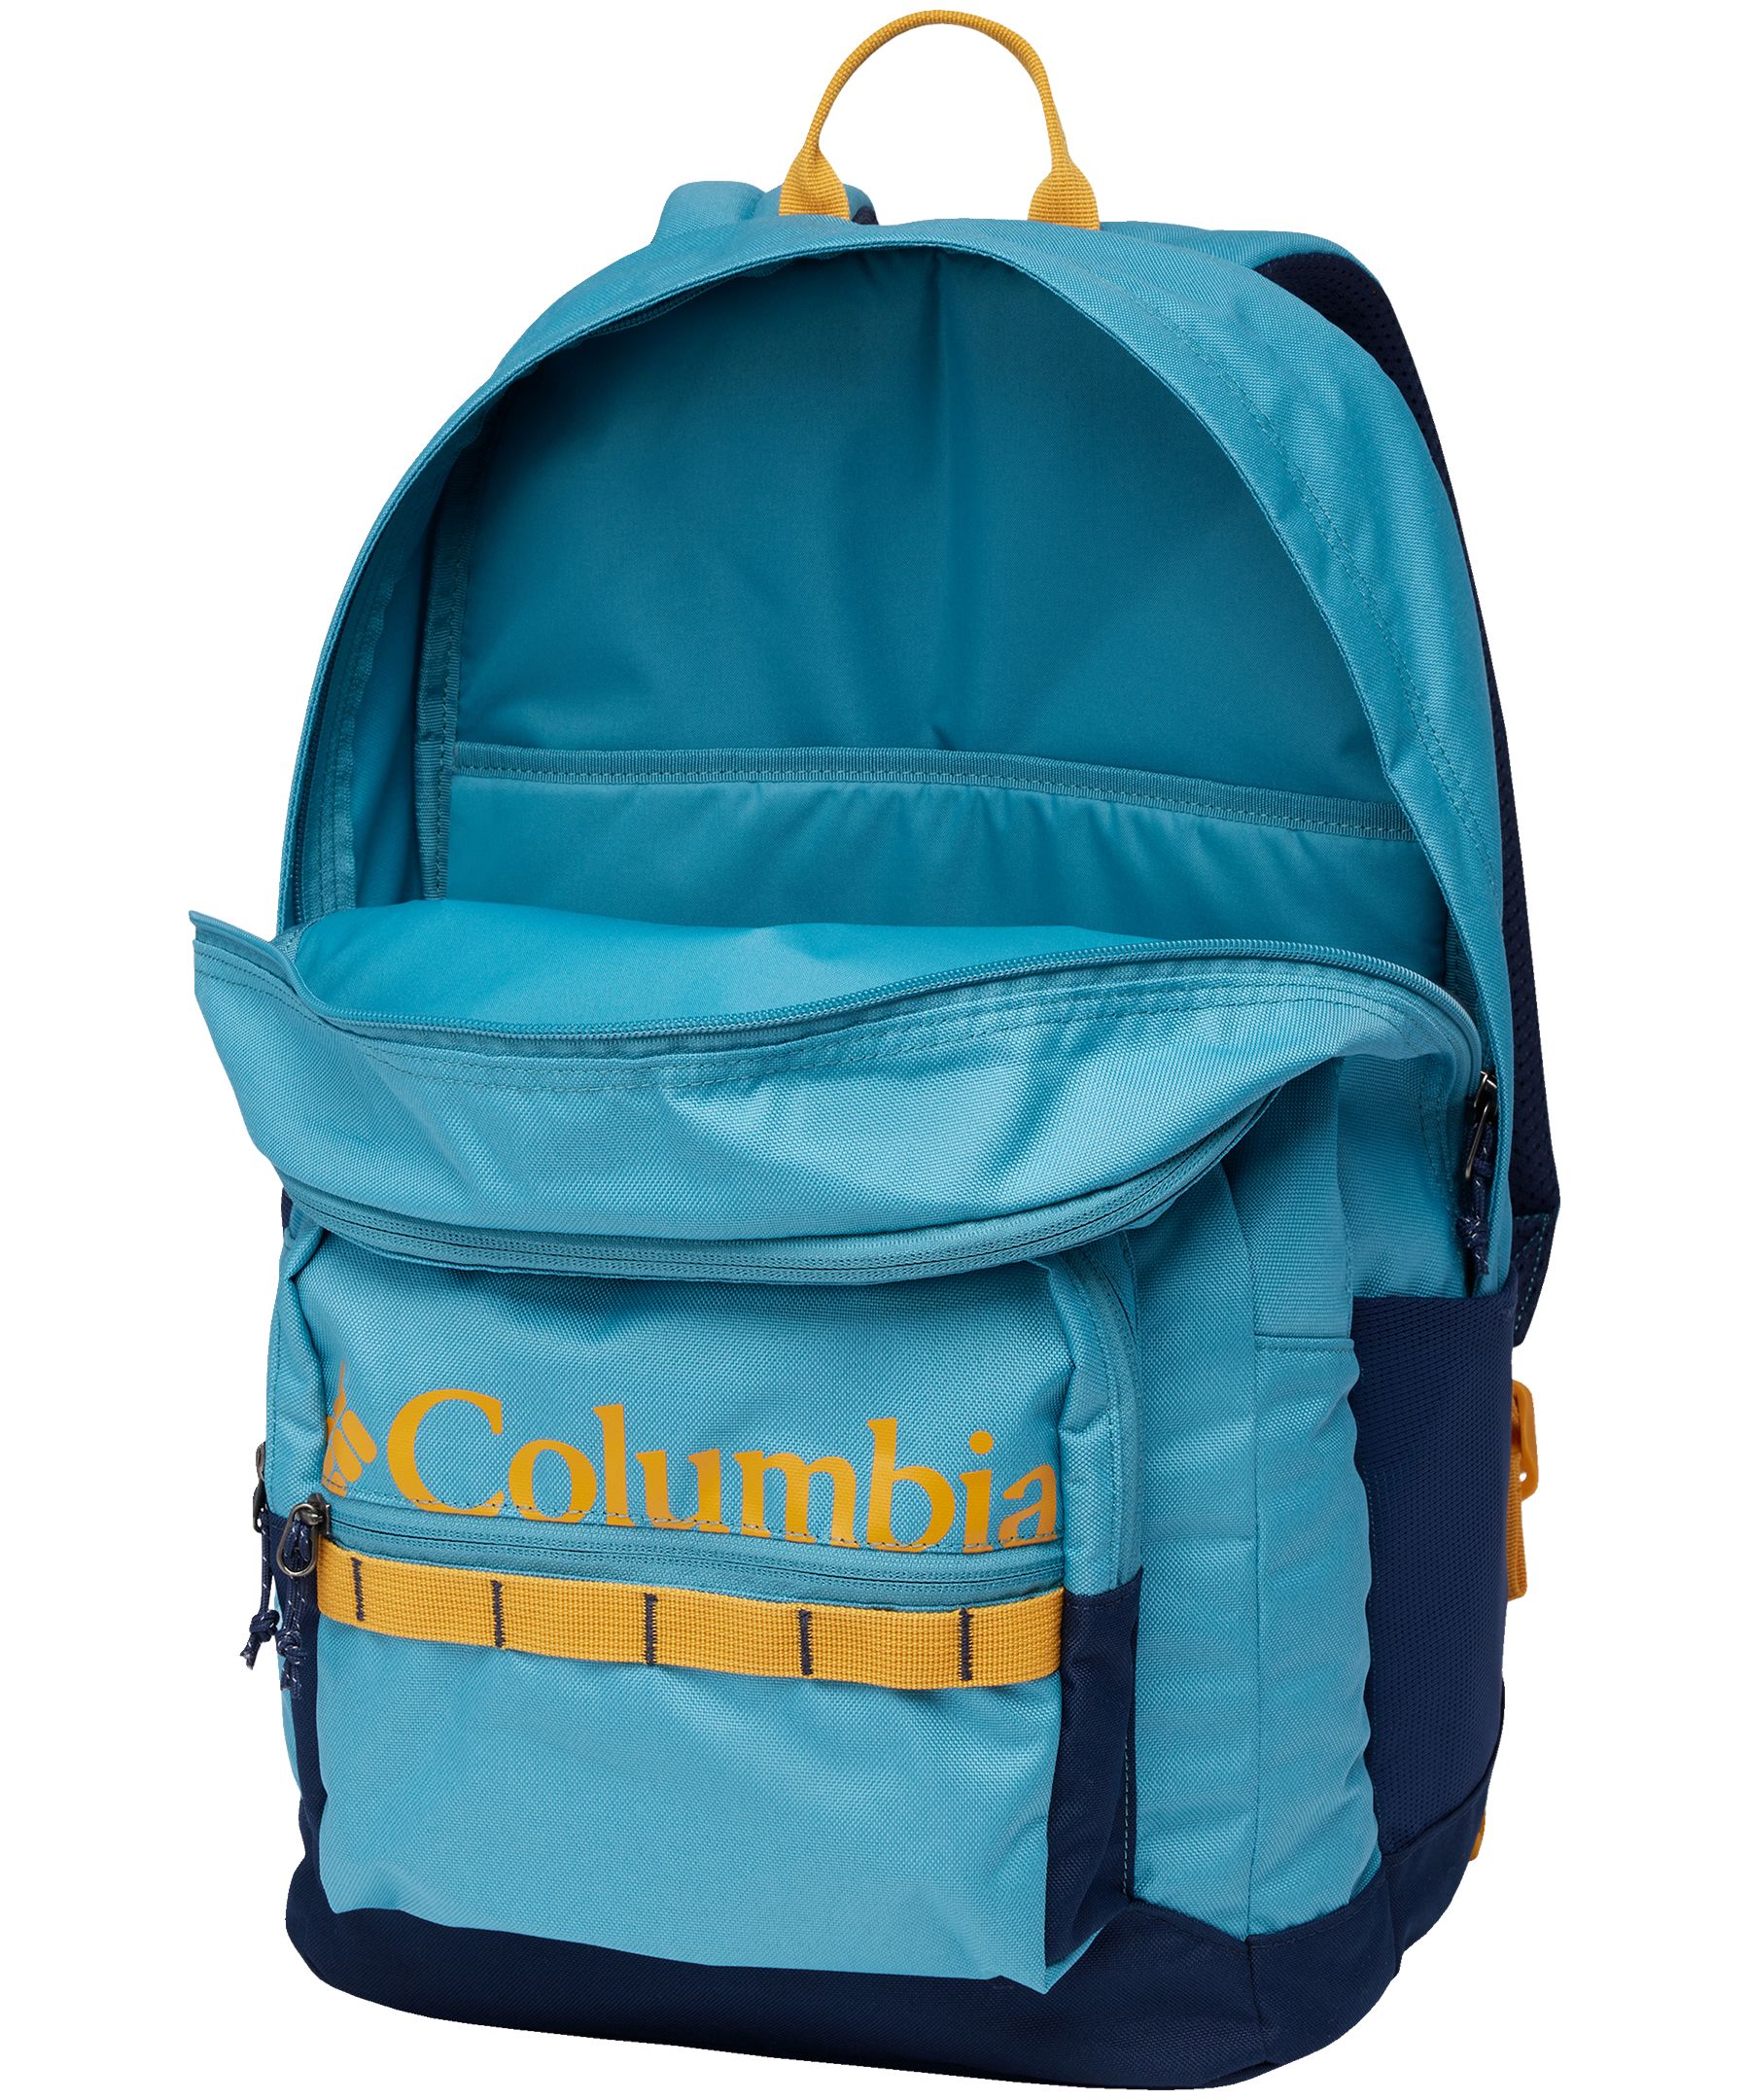 Columbia Backpacks Dubai Mall - Blue Black Boy PFG Zigzag 22L